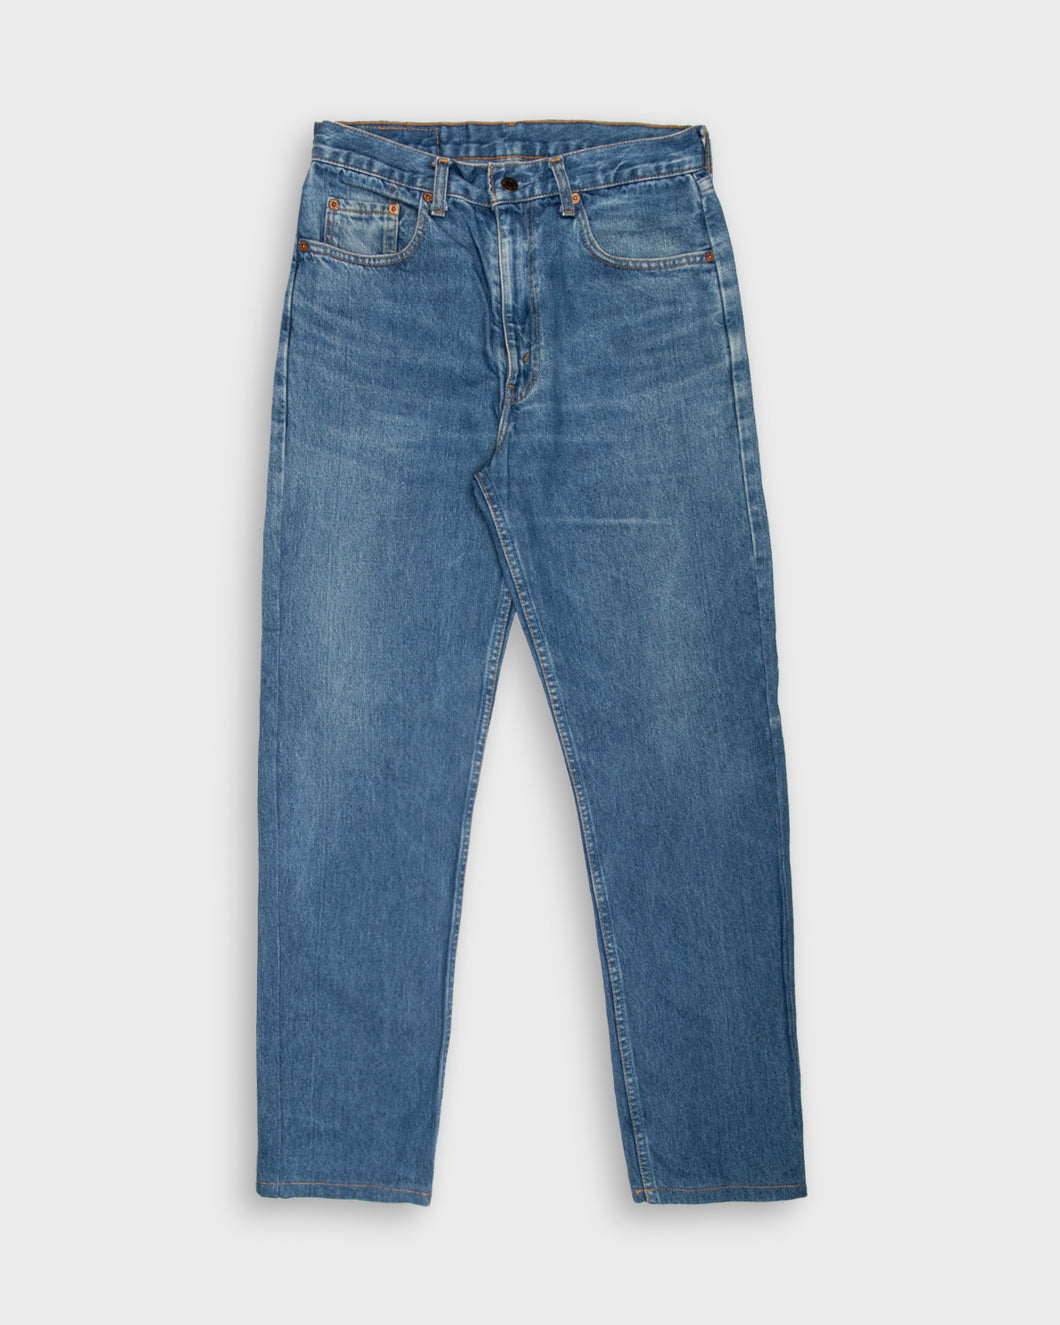 Classic blue '90s Levi's Orange Tab 615 straight leg jeans